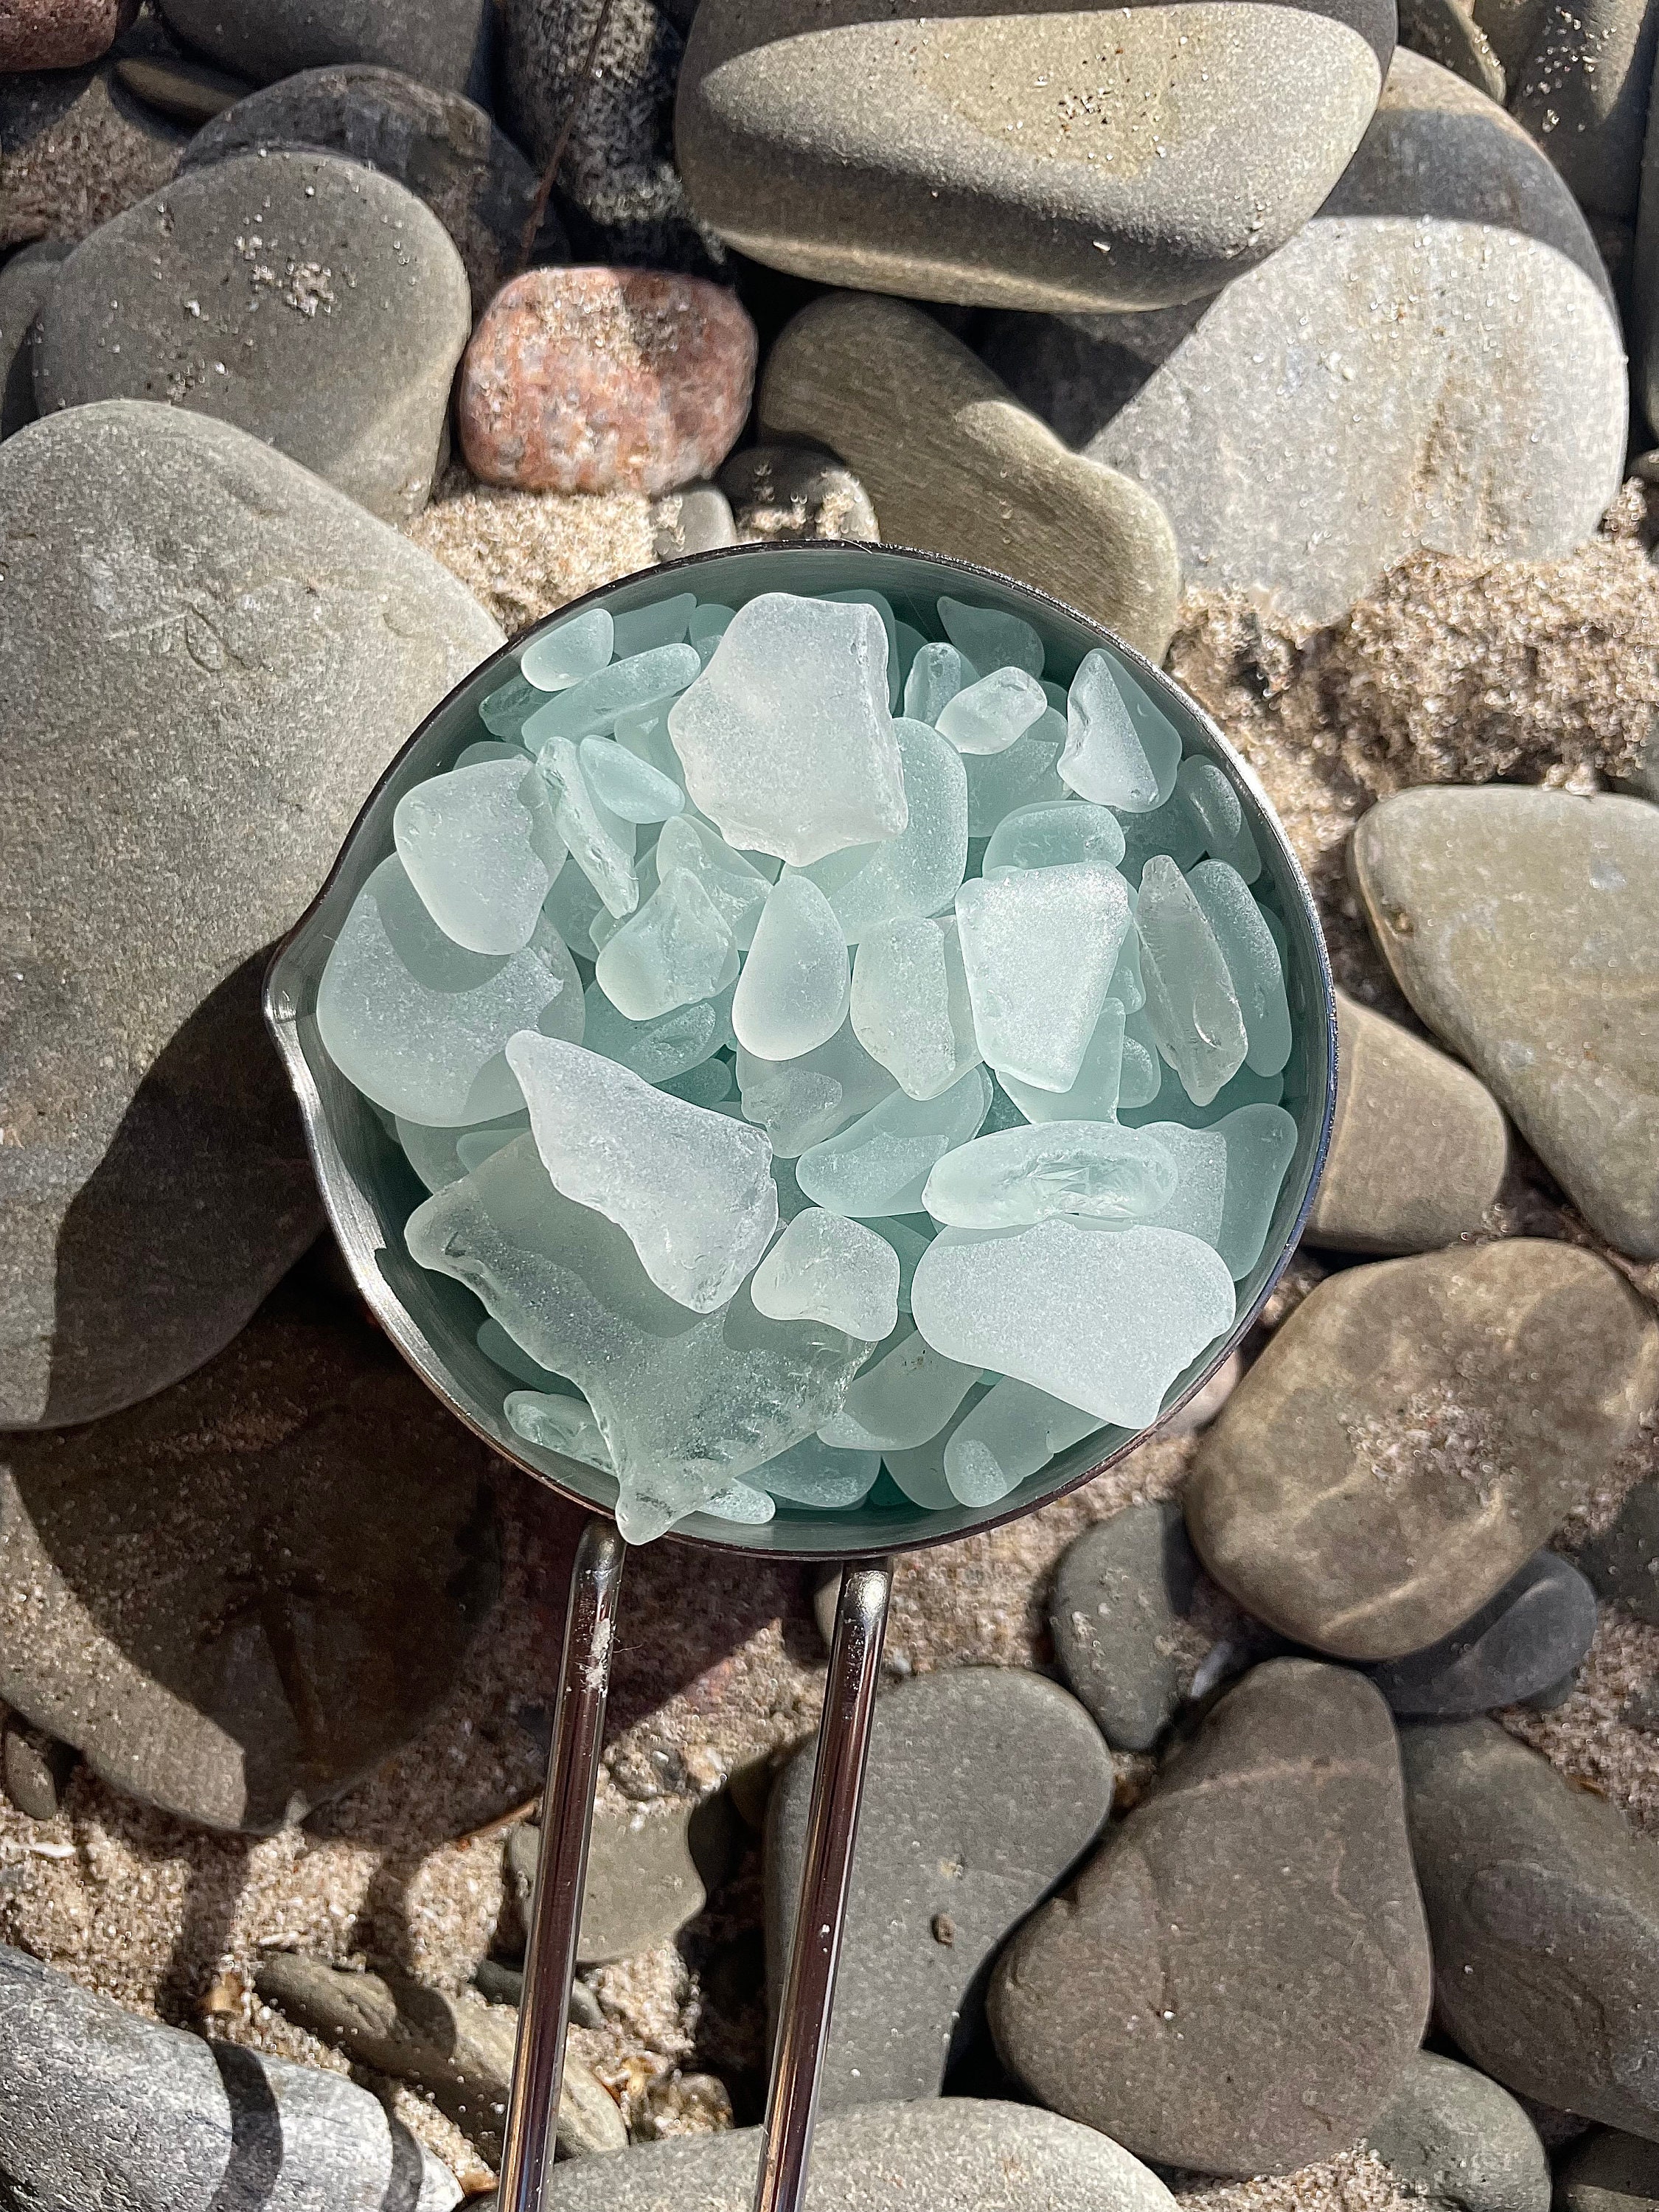 Sea Glass Craft Supplies-beach Glass Bulk bulk Sea Glass Bulk Lot for Crafts  